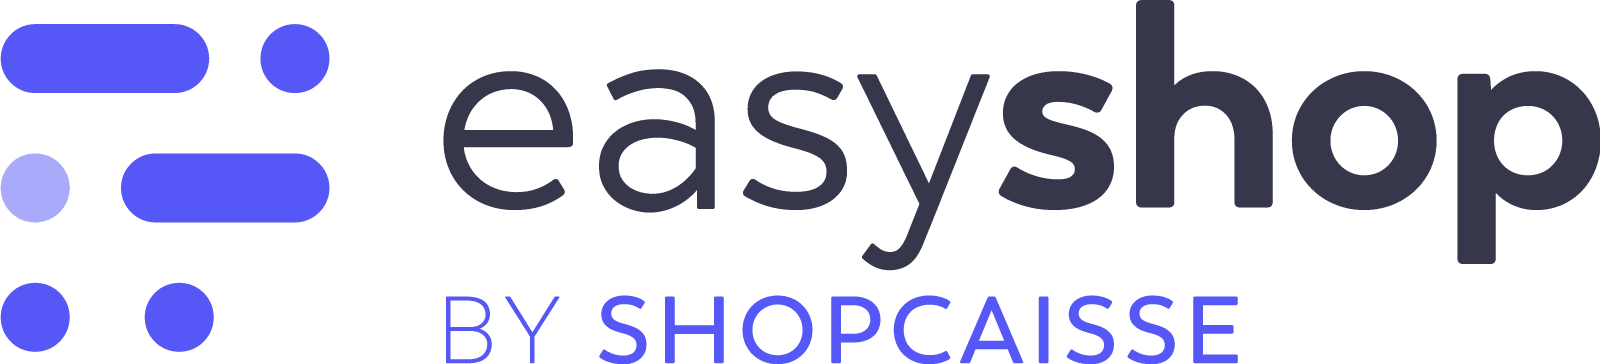 logo easyshop by shopcaisse